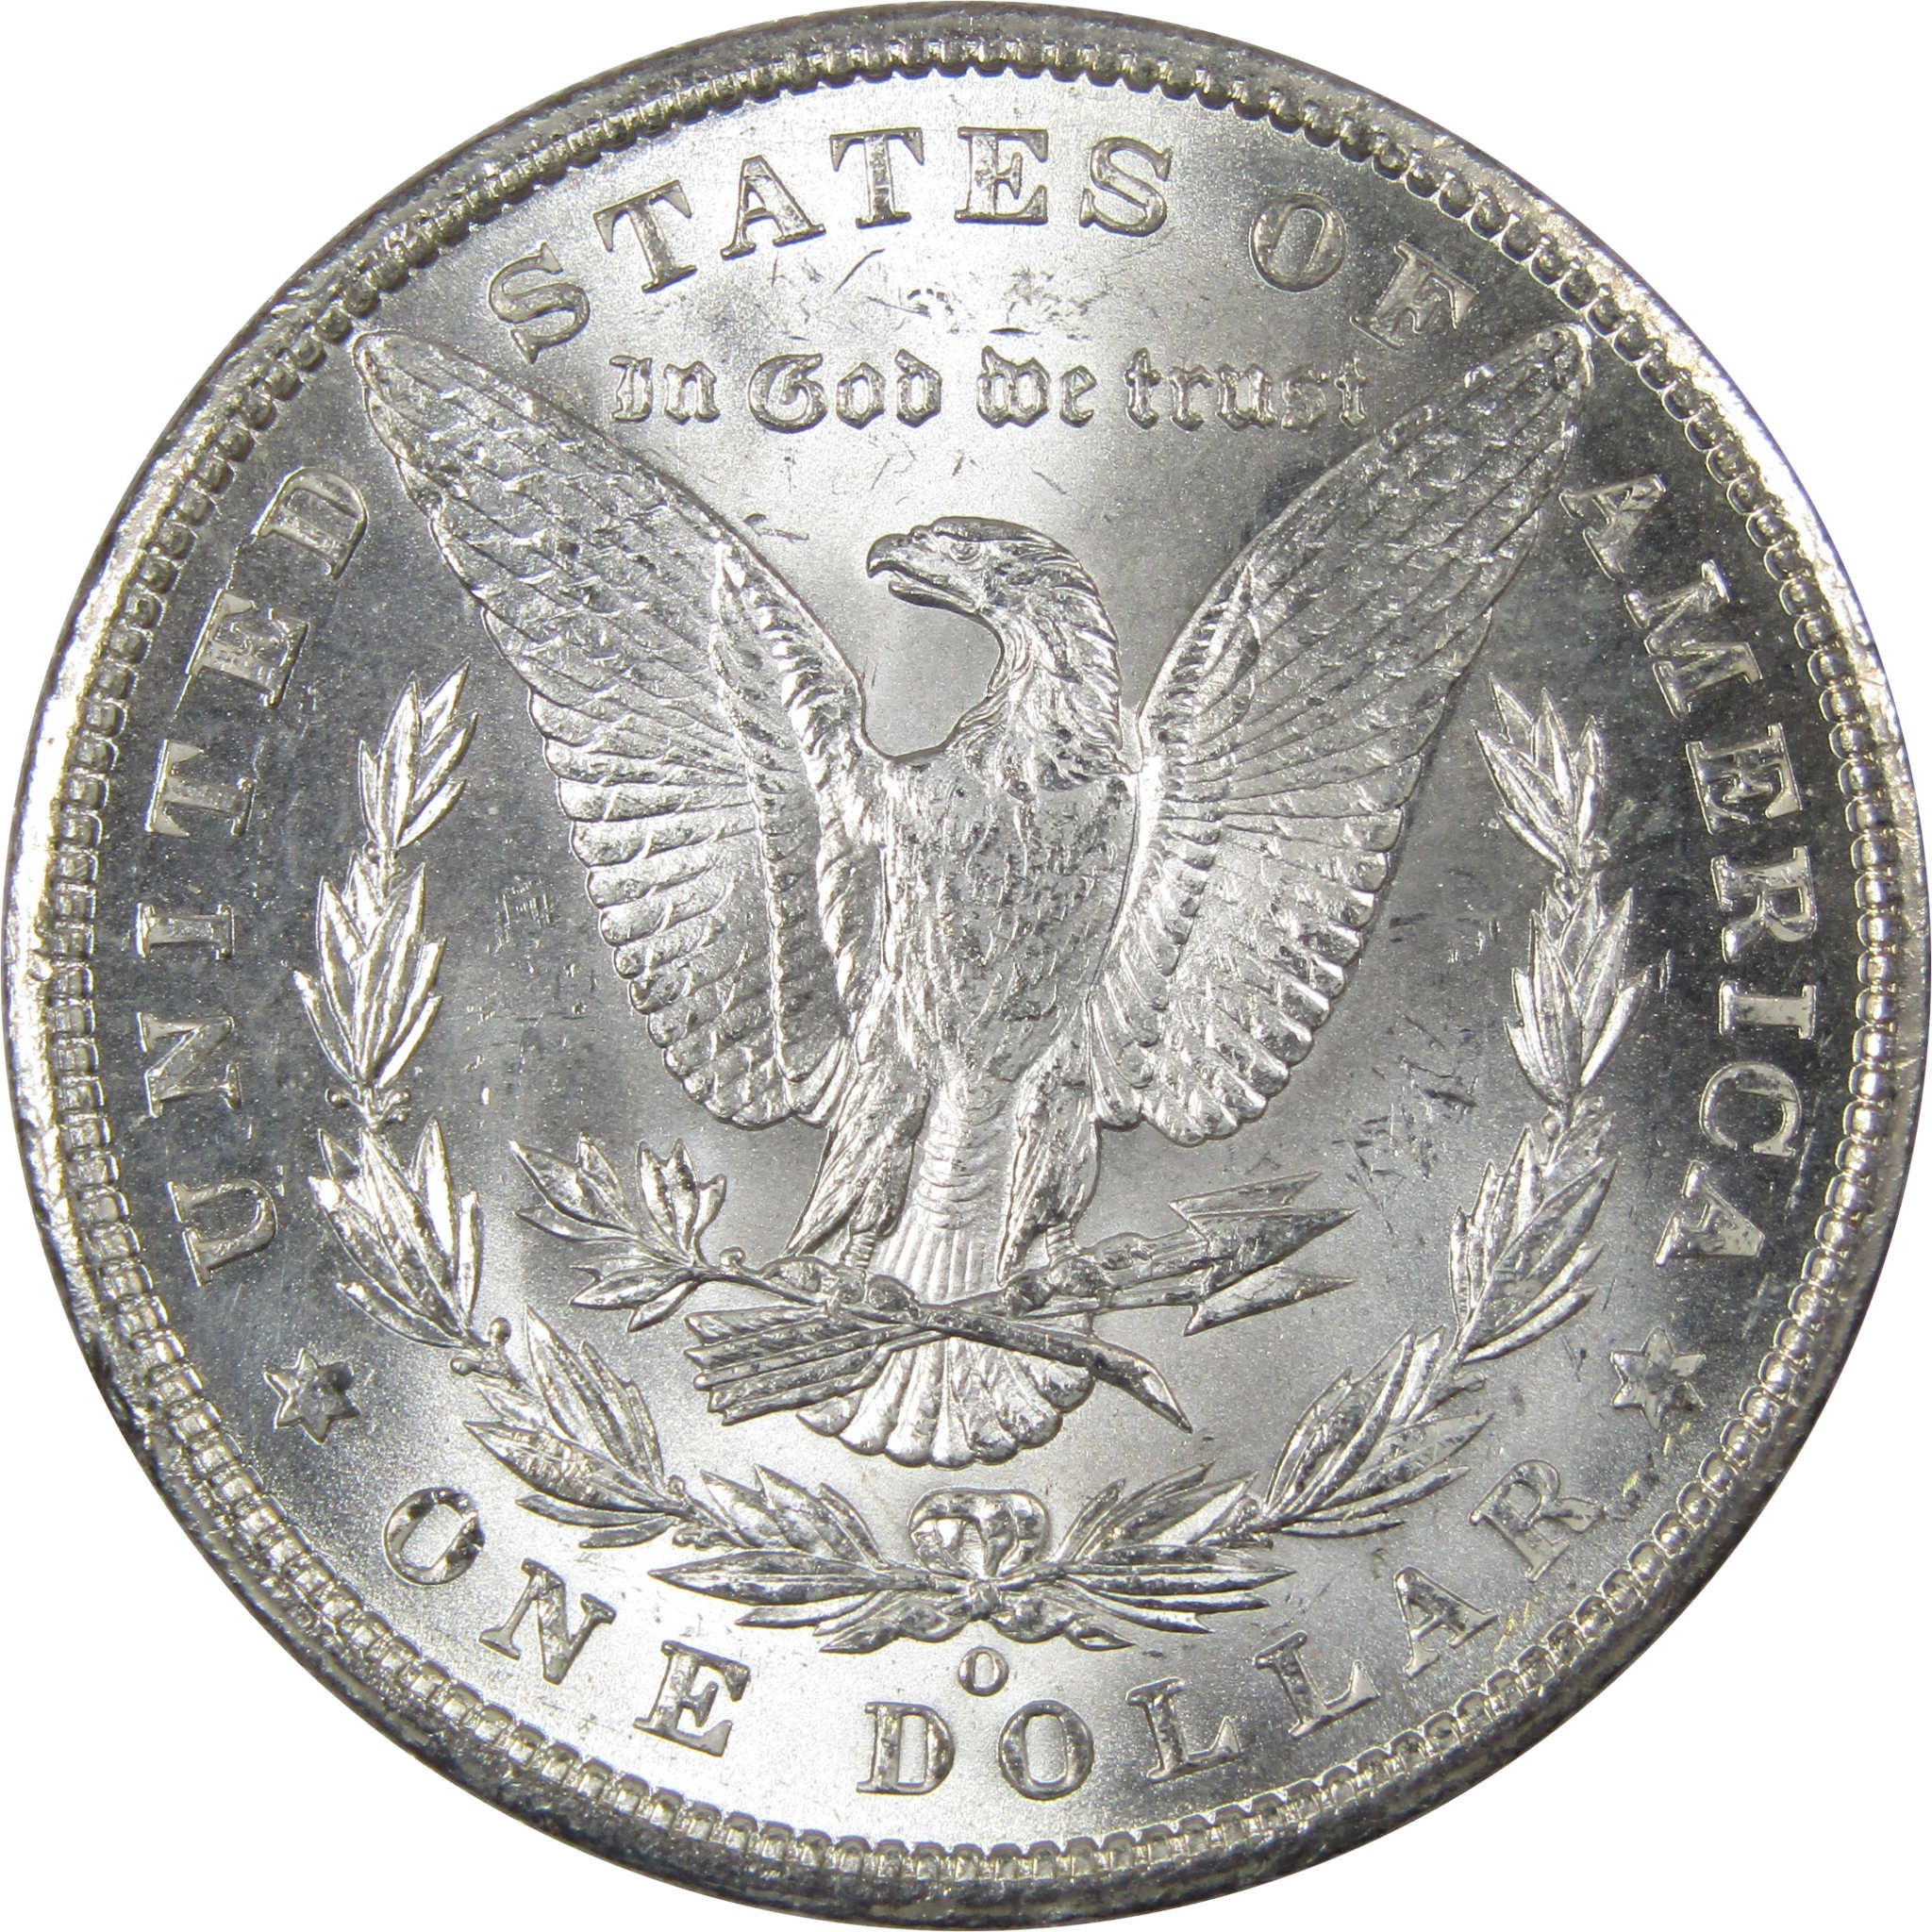 1900 O Morgan Dollar BU Uncirculated Mint State 90% Silver SKU:IPC9746 - Morgan coin - Morgan silver dollar - Morgan silver dollar for sale - Profile Coins &amp; Collectibles